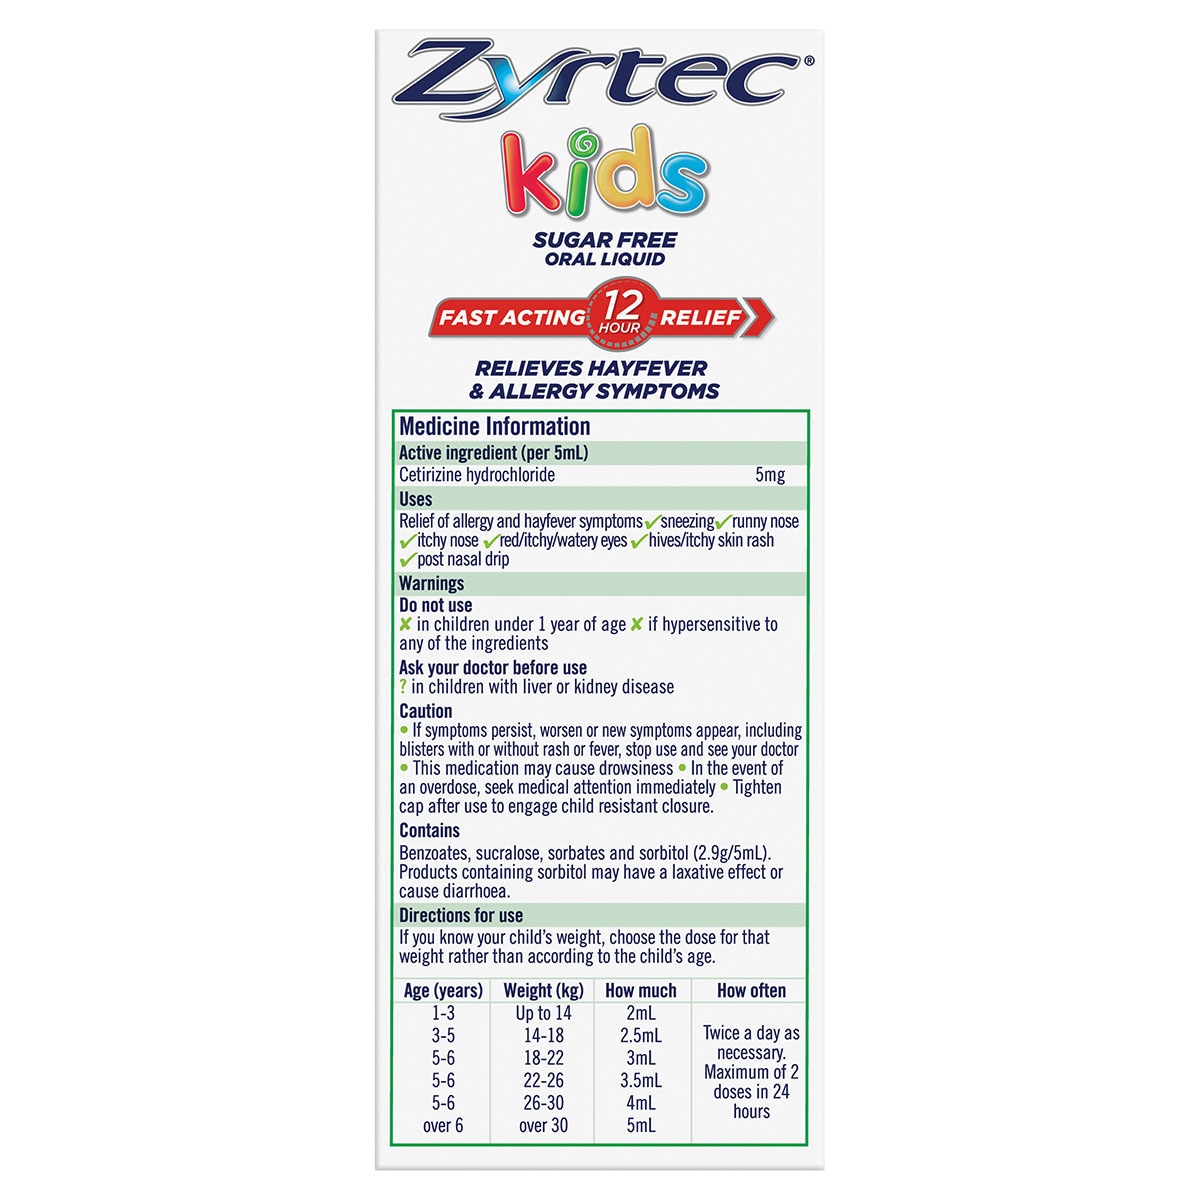 Zyrtec Kids Fast Acting Allergy & Hayfever Relief Grape Flavour Oral Liquid 120ml